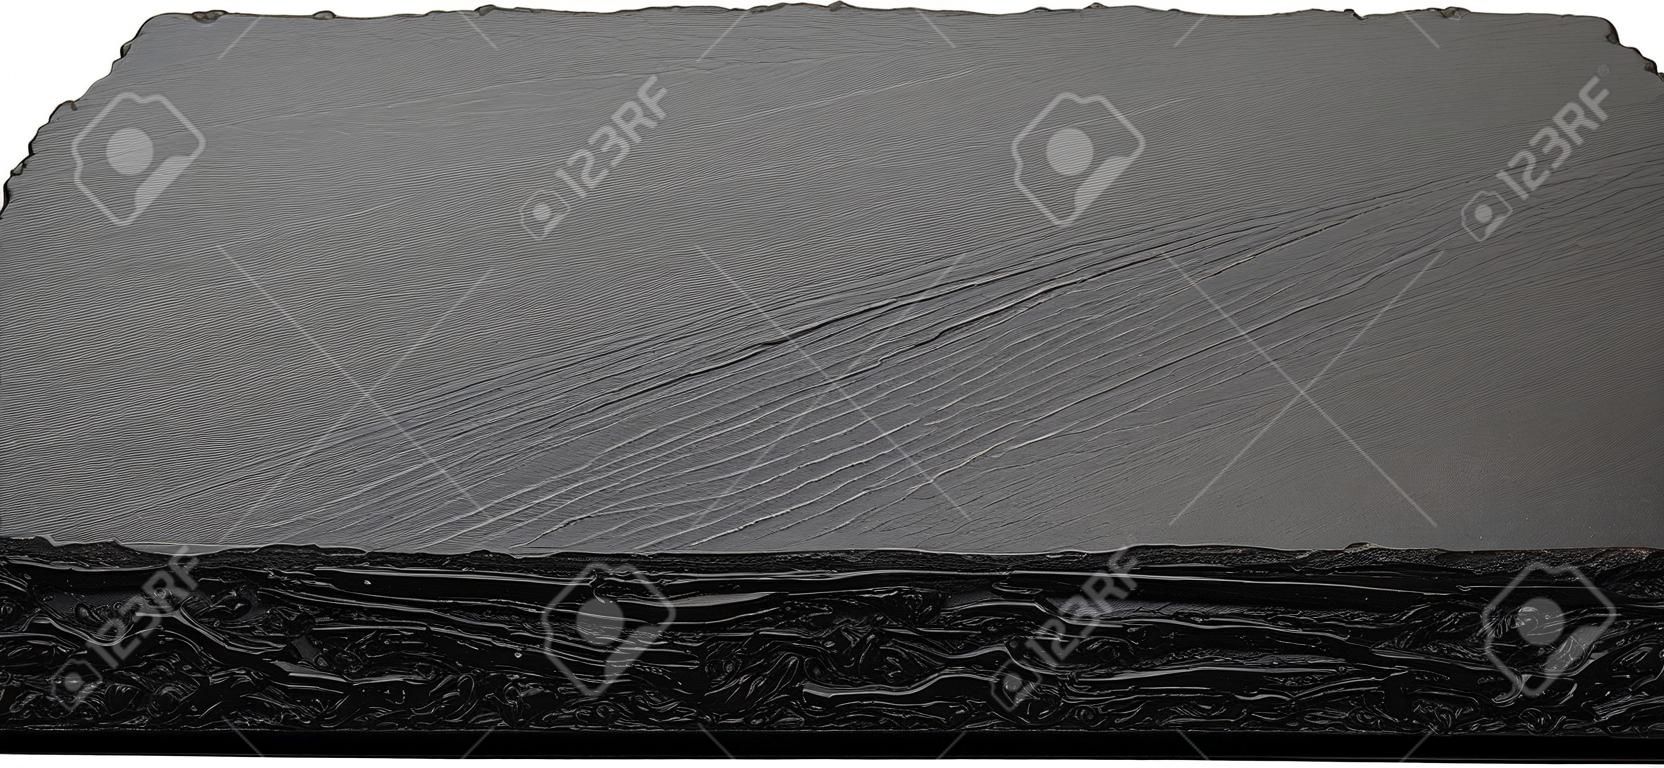 Black stone plate isolated on white background